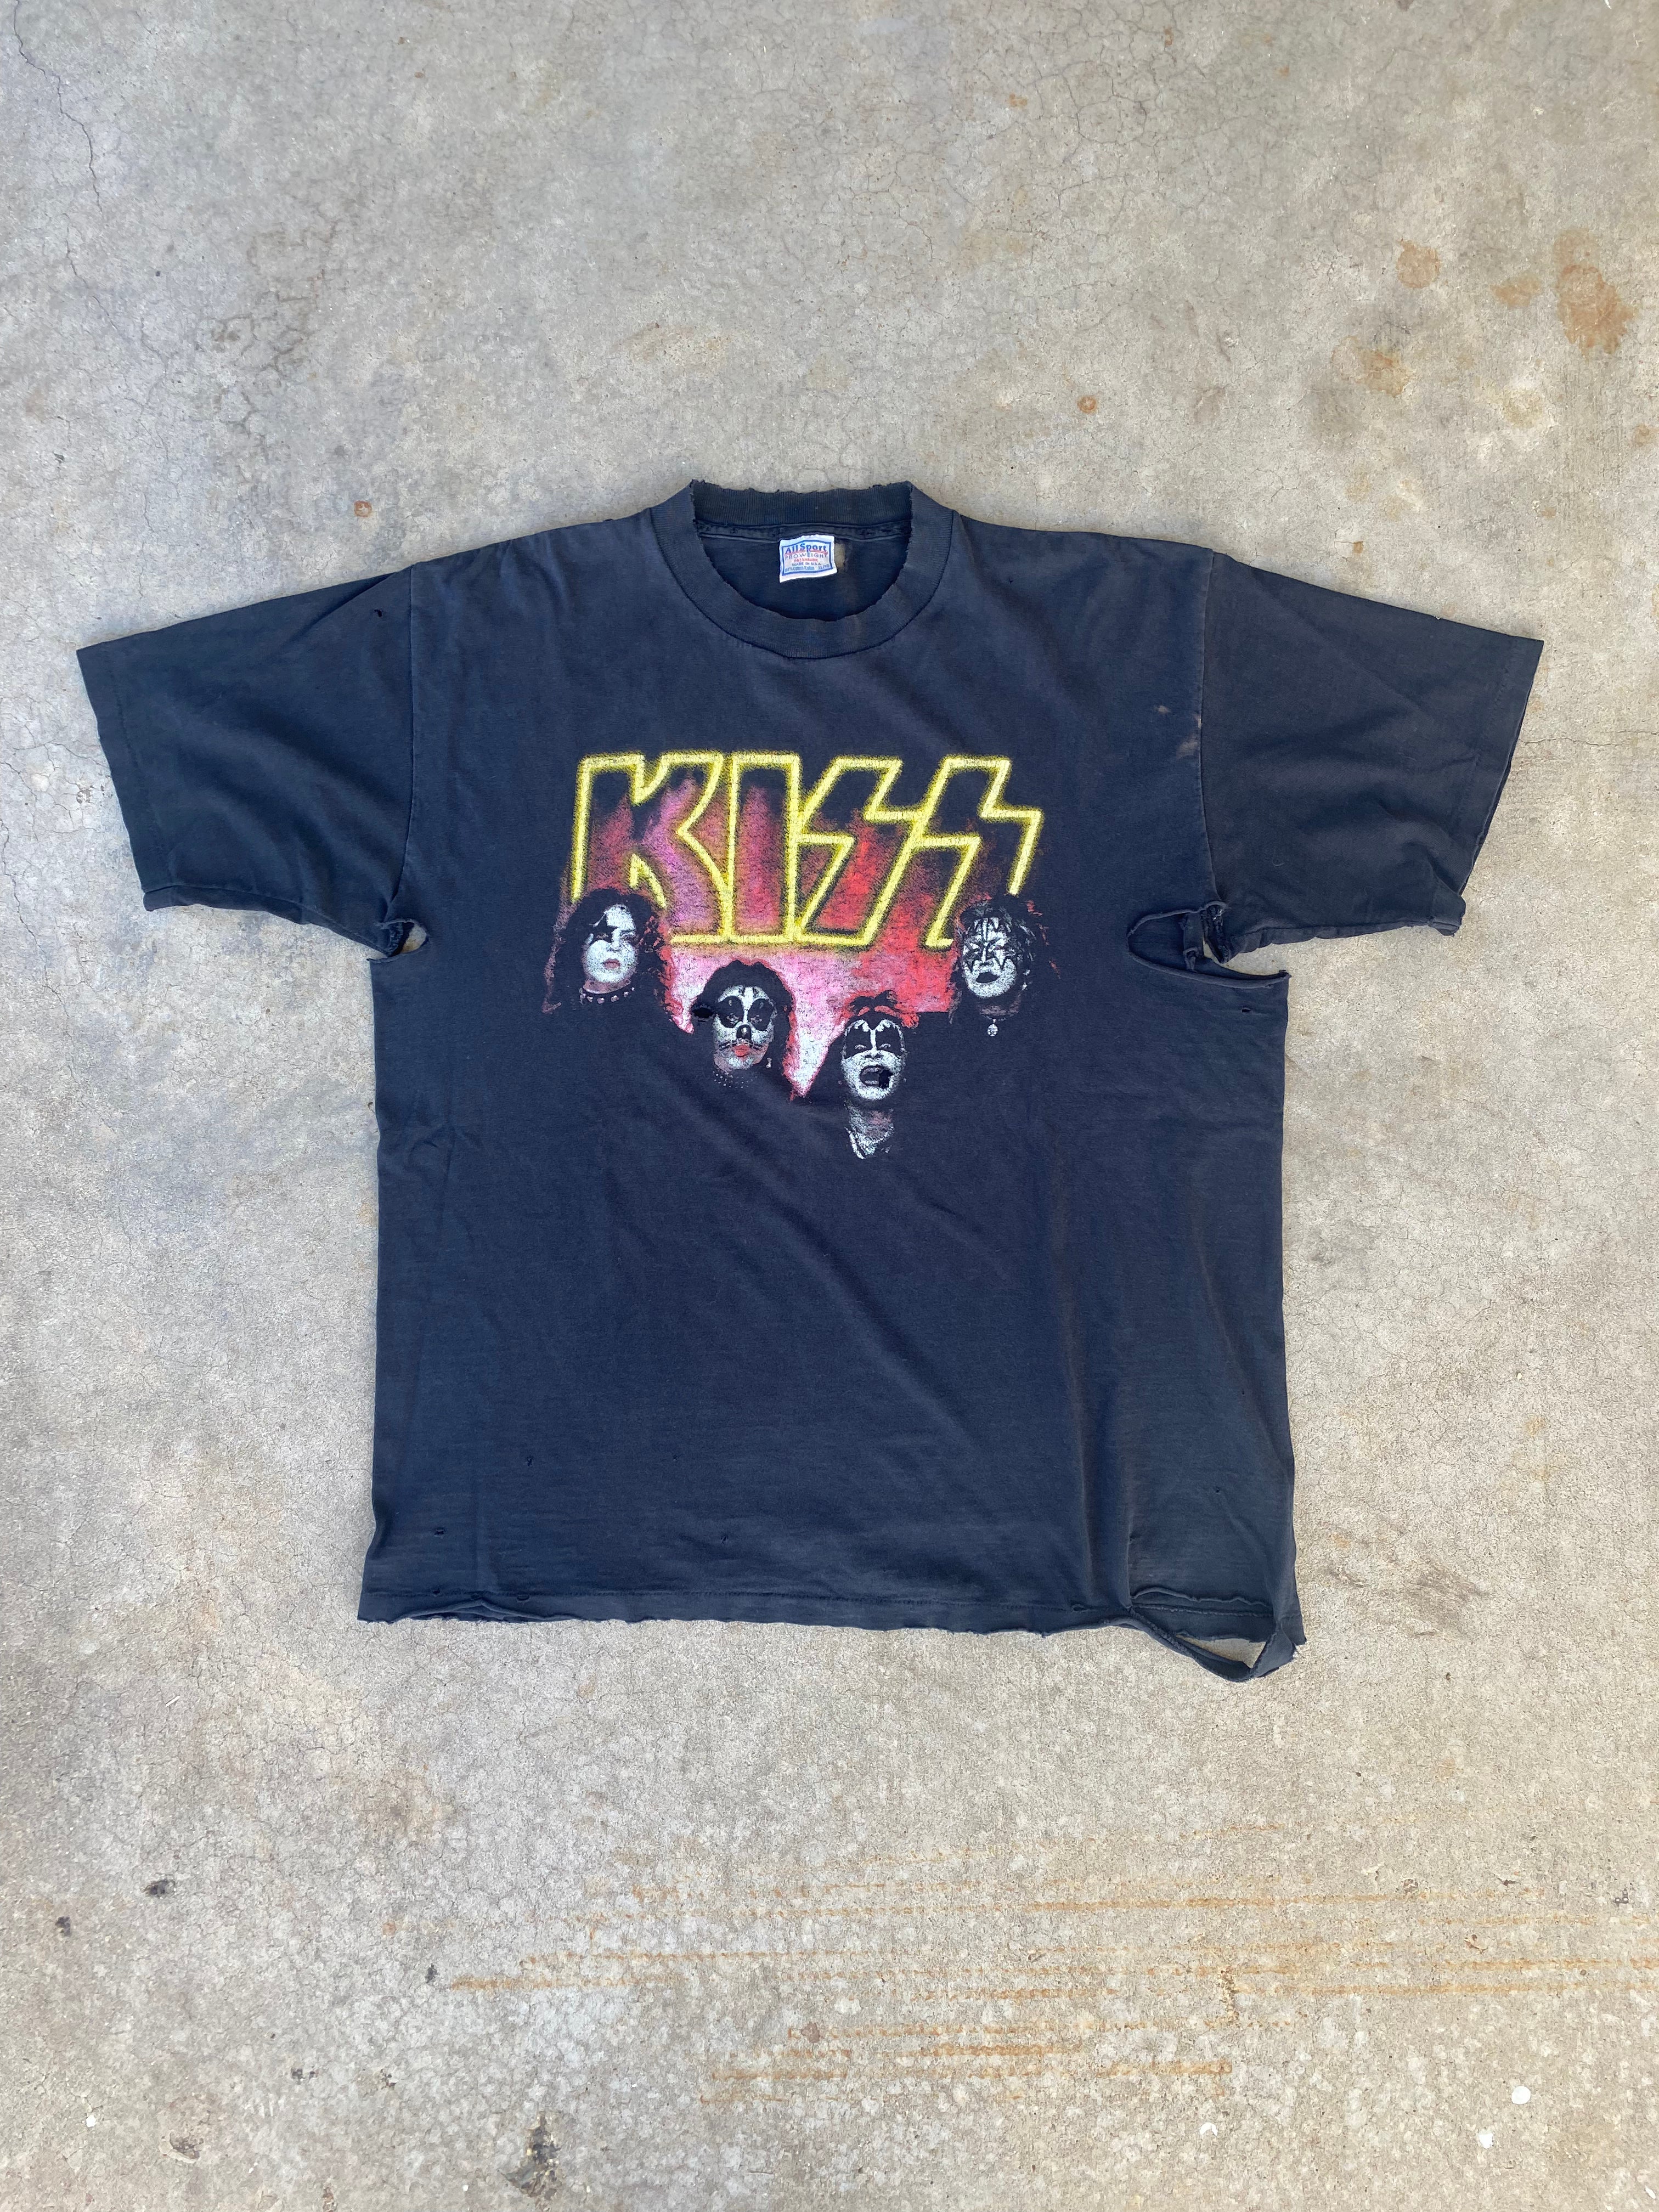 1990s Thrashed KISS T-Shirt (XL)